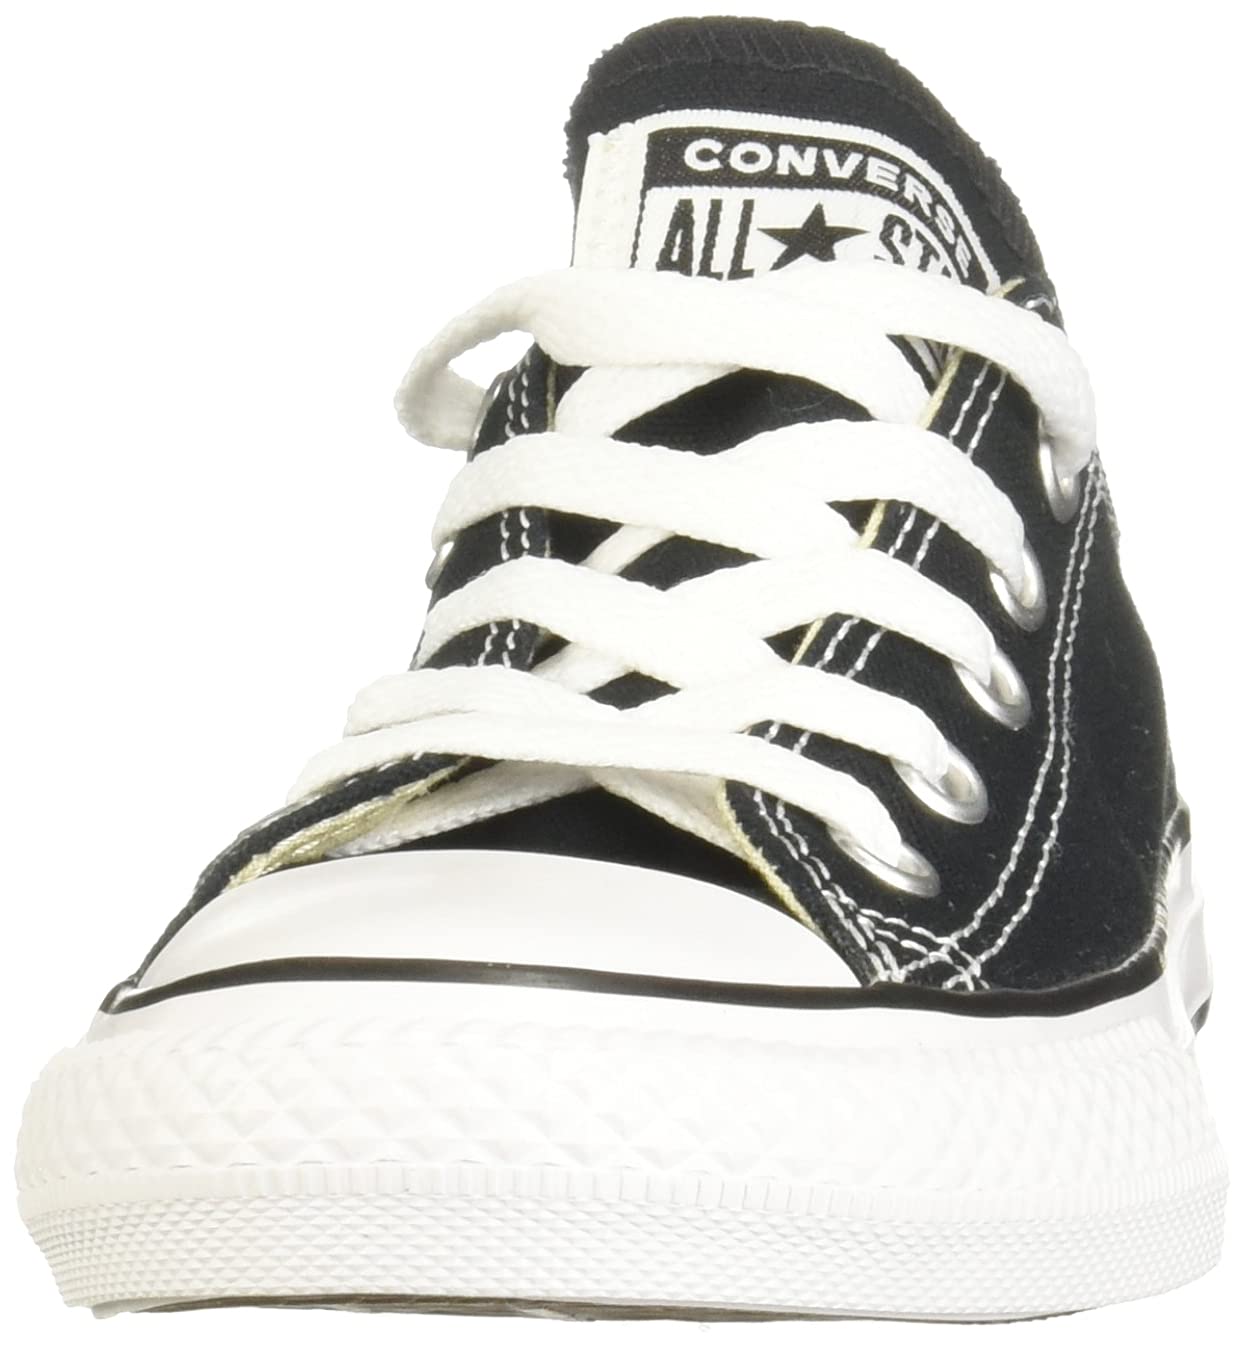 Converse Chuck Taylor All Star OX Shoe - Kids' Black, 13.0